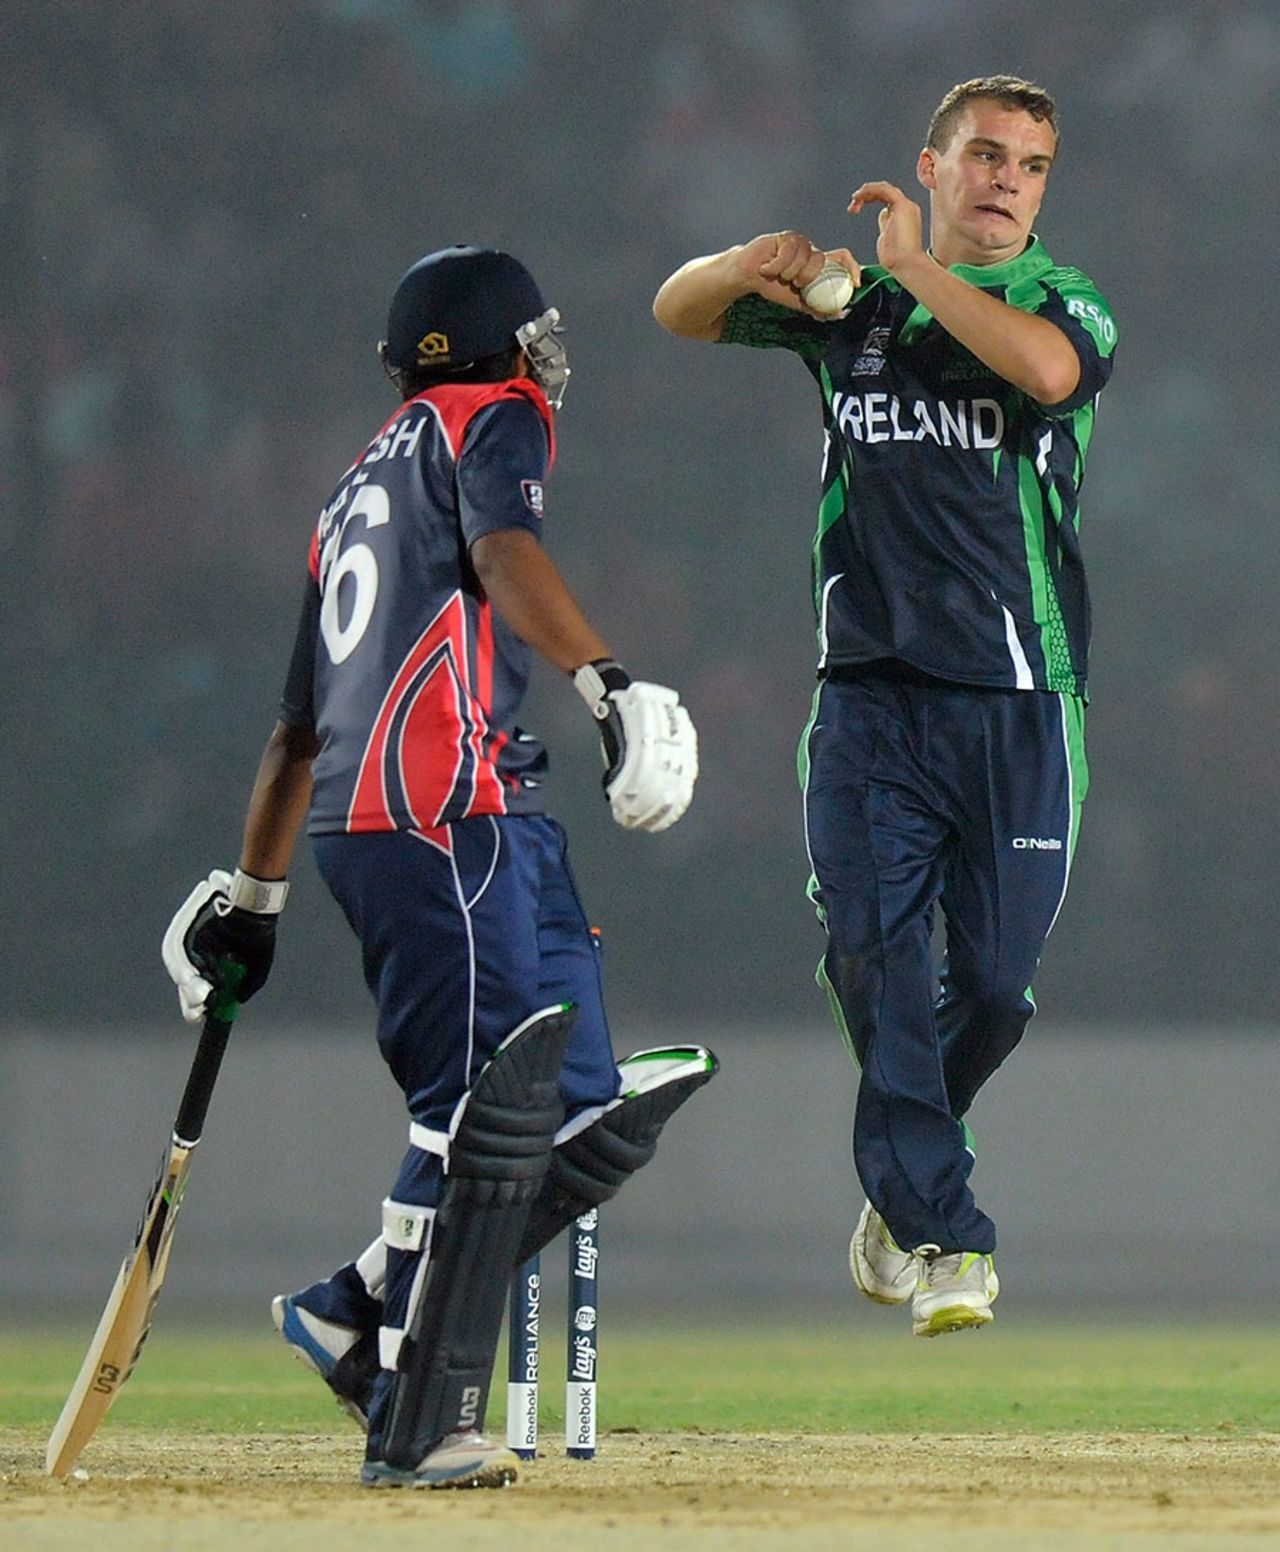 Andy McBrine bowls, Bangladesh v Ireland, World T20 warm-up match, Fatullah, March 14, 2014